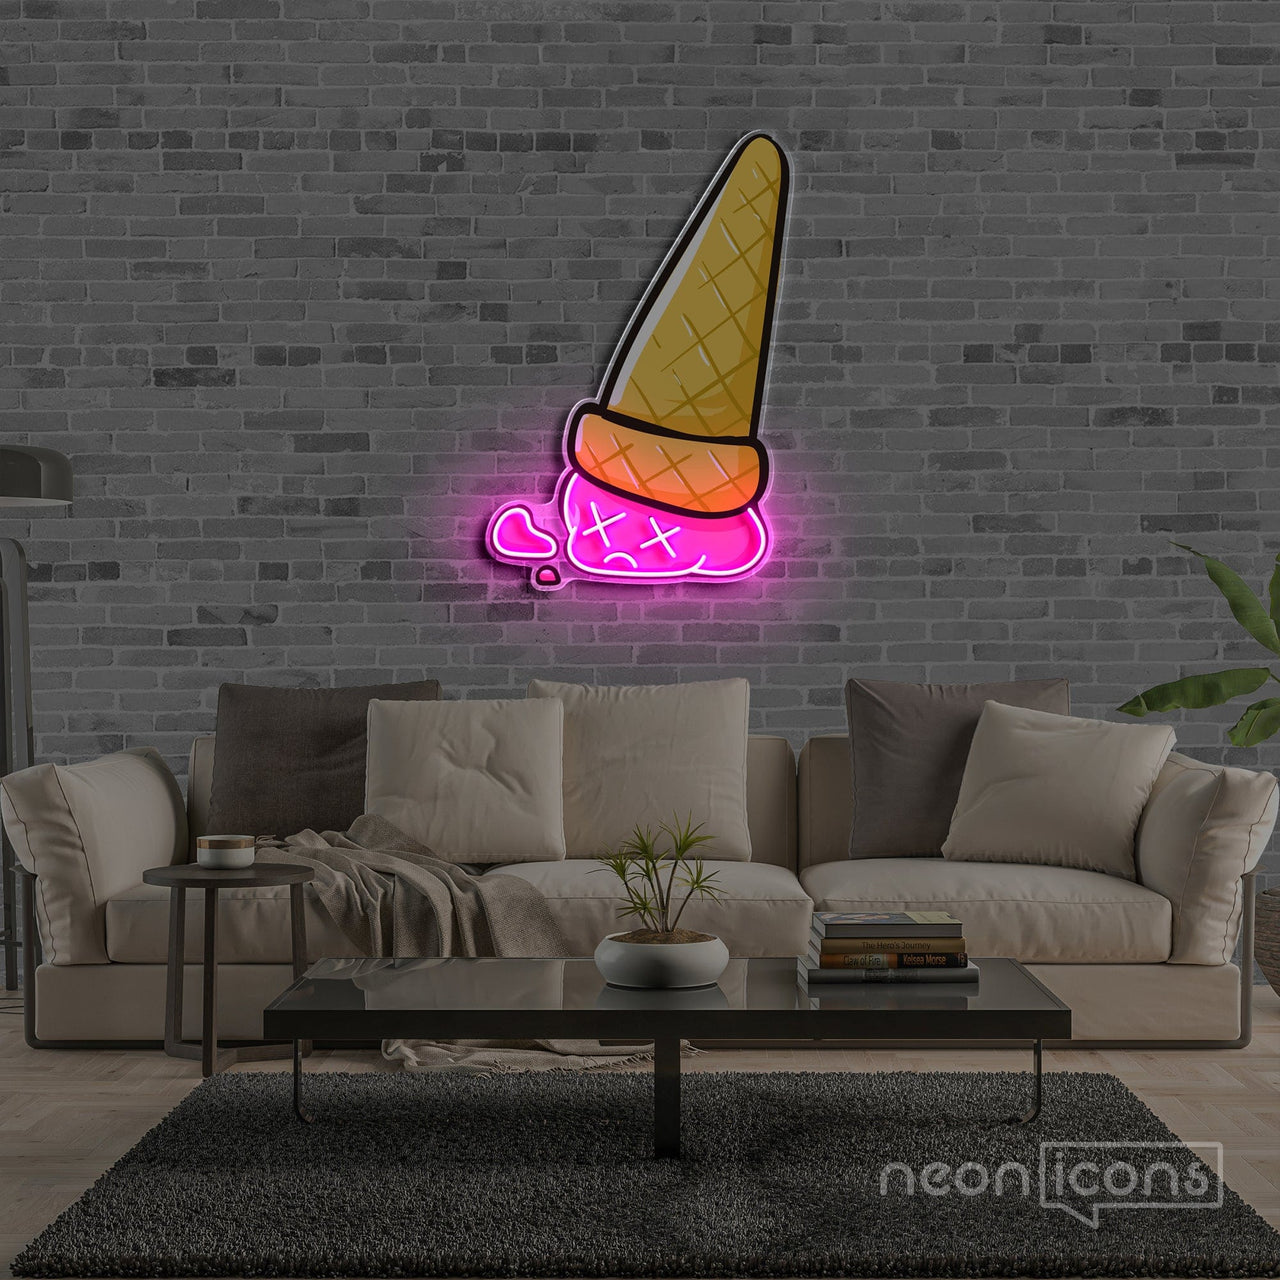 "Sadcream Cone V2" Neon x Acrylic Artwork by Neon Icons